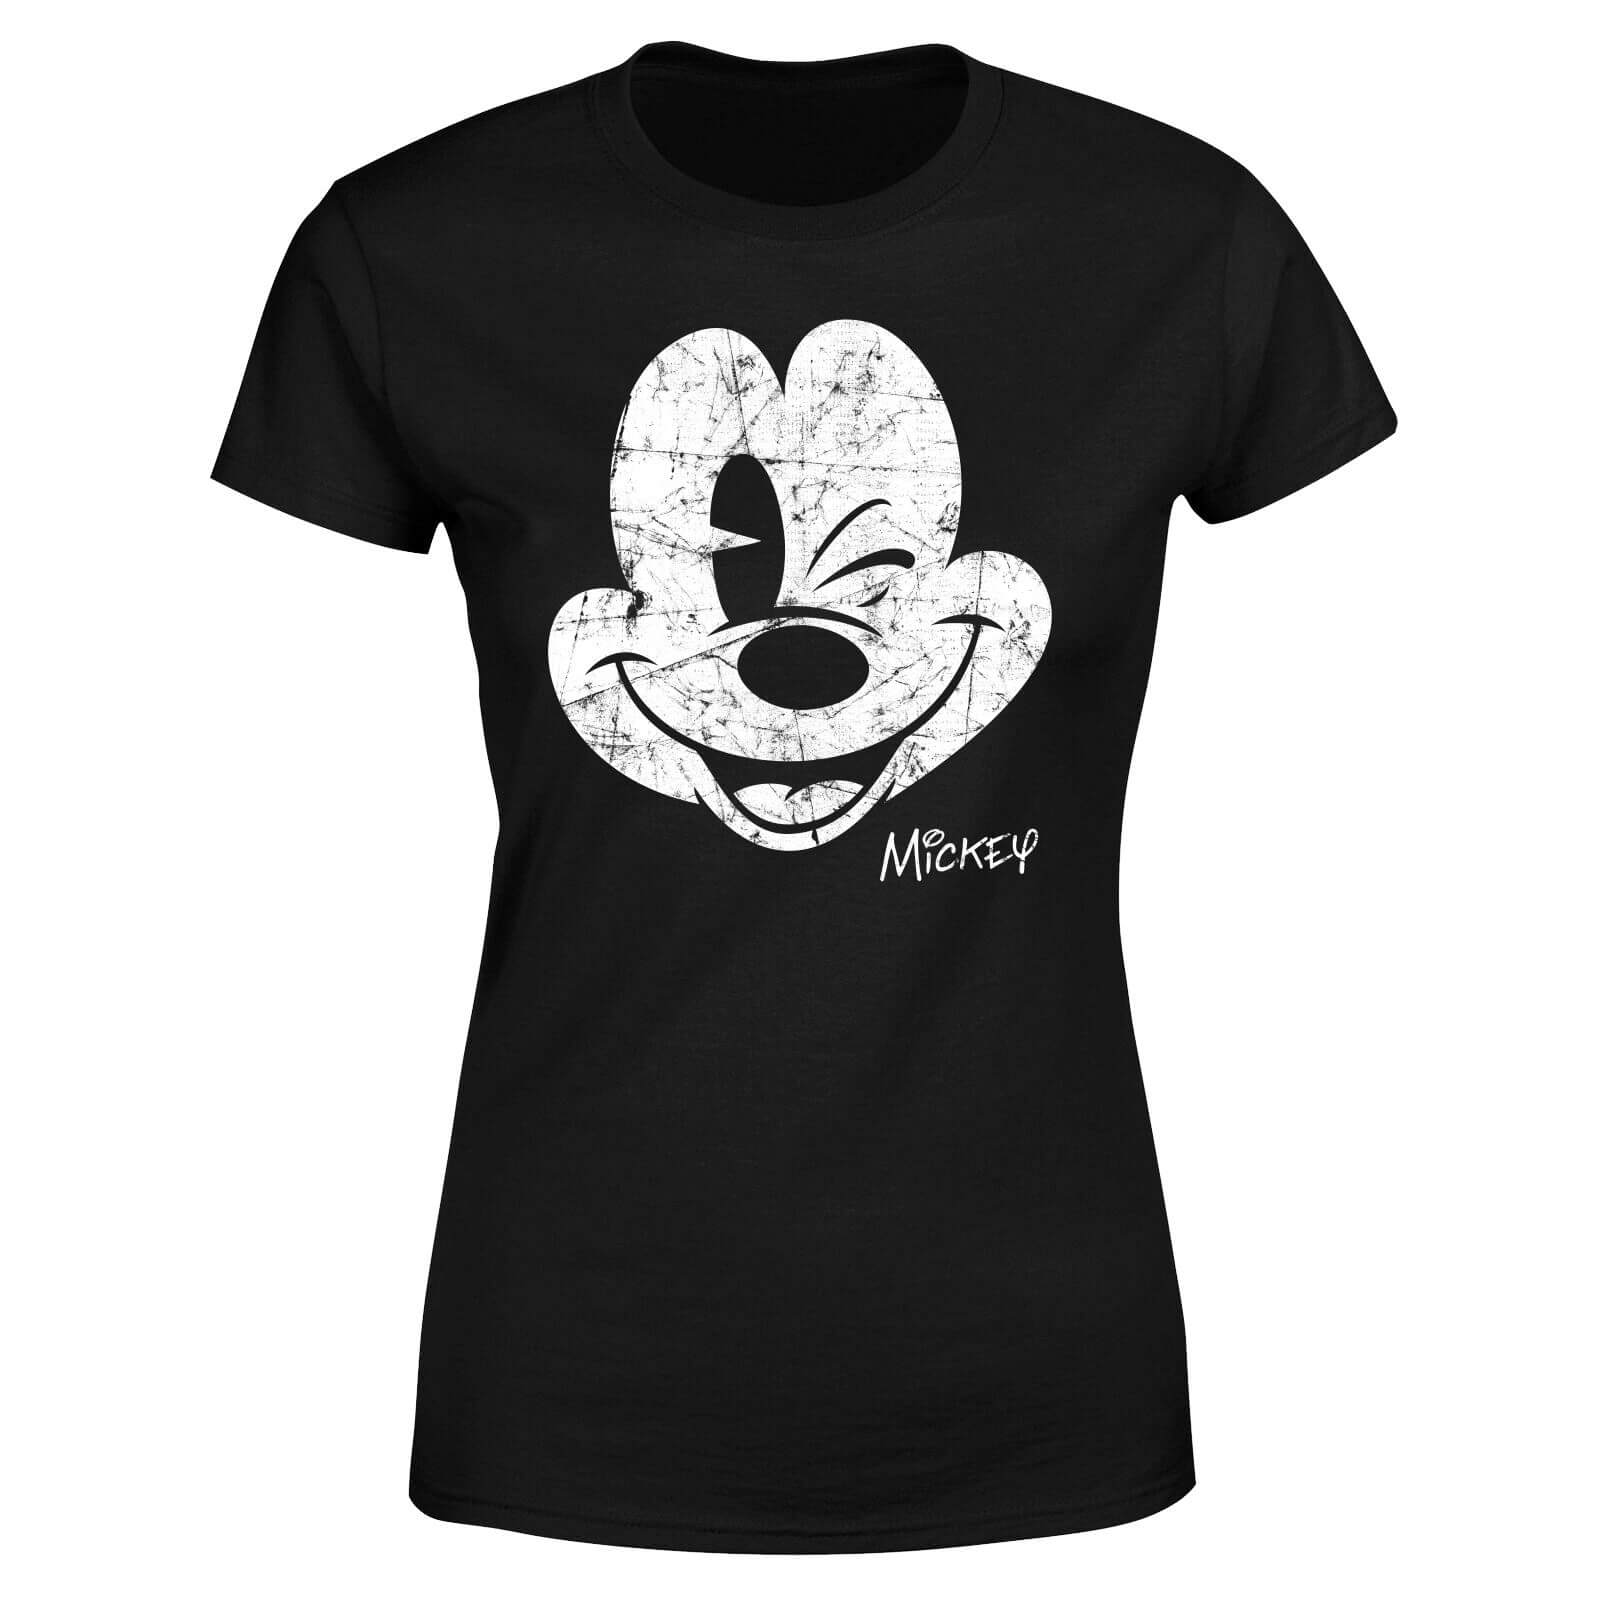 Disney Mickey Mouse Worn Face Women's T-Shirt - Black - XS - Black